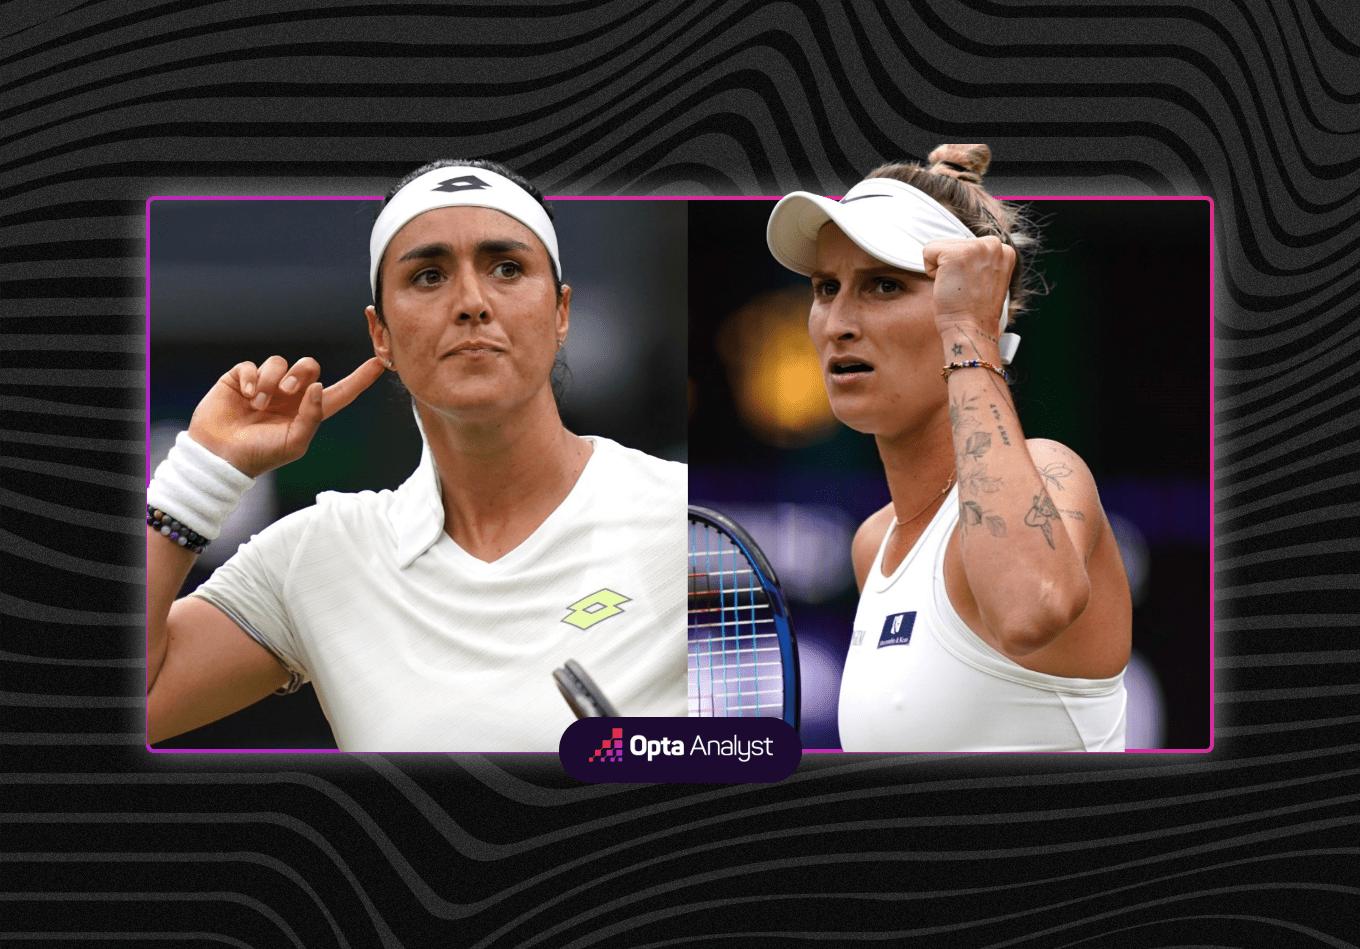 Jabeur vs. Vondrousova: Who Will Win the Wimbledon Women’s Singles Final?